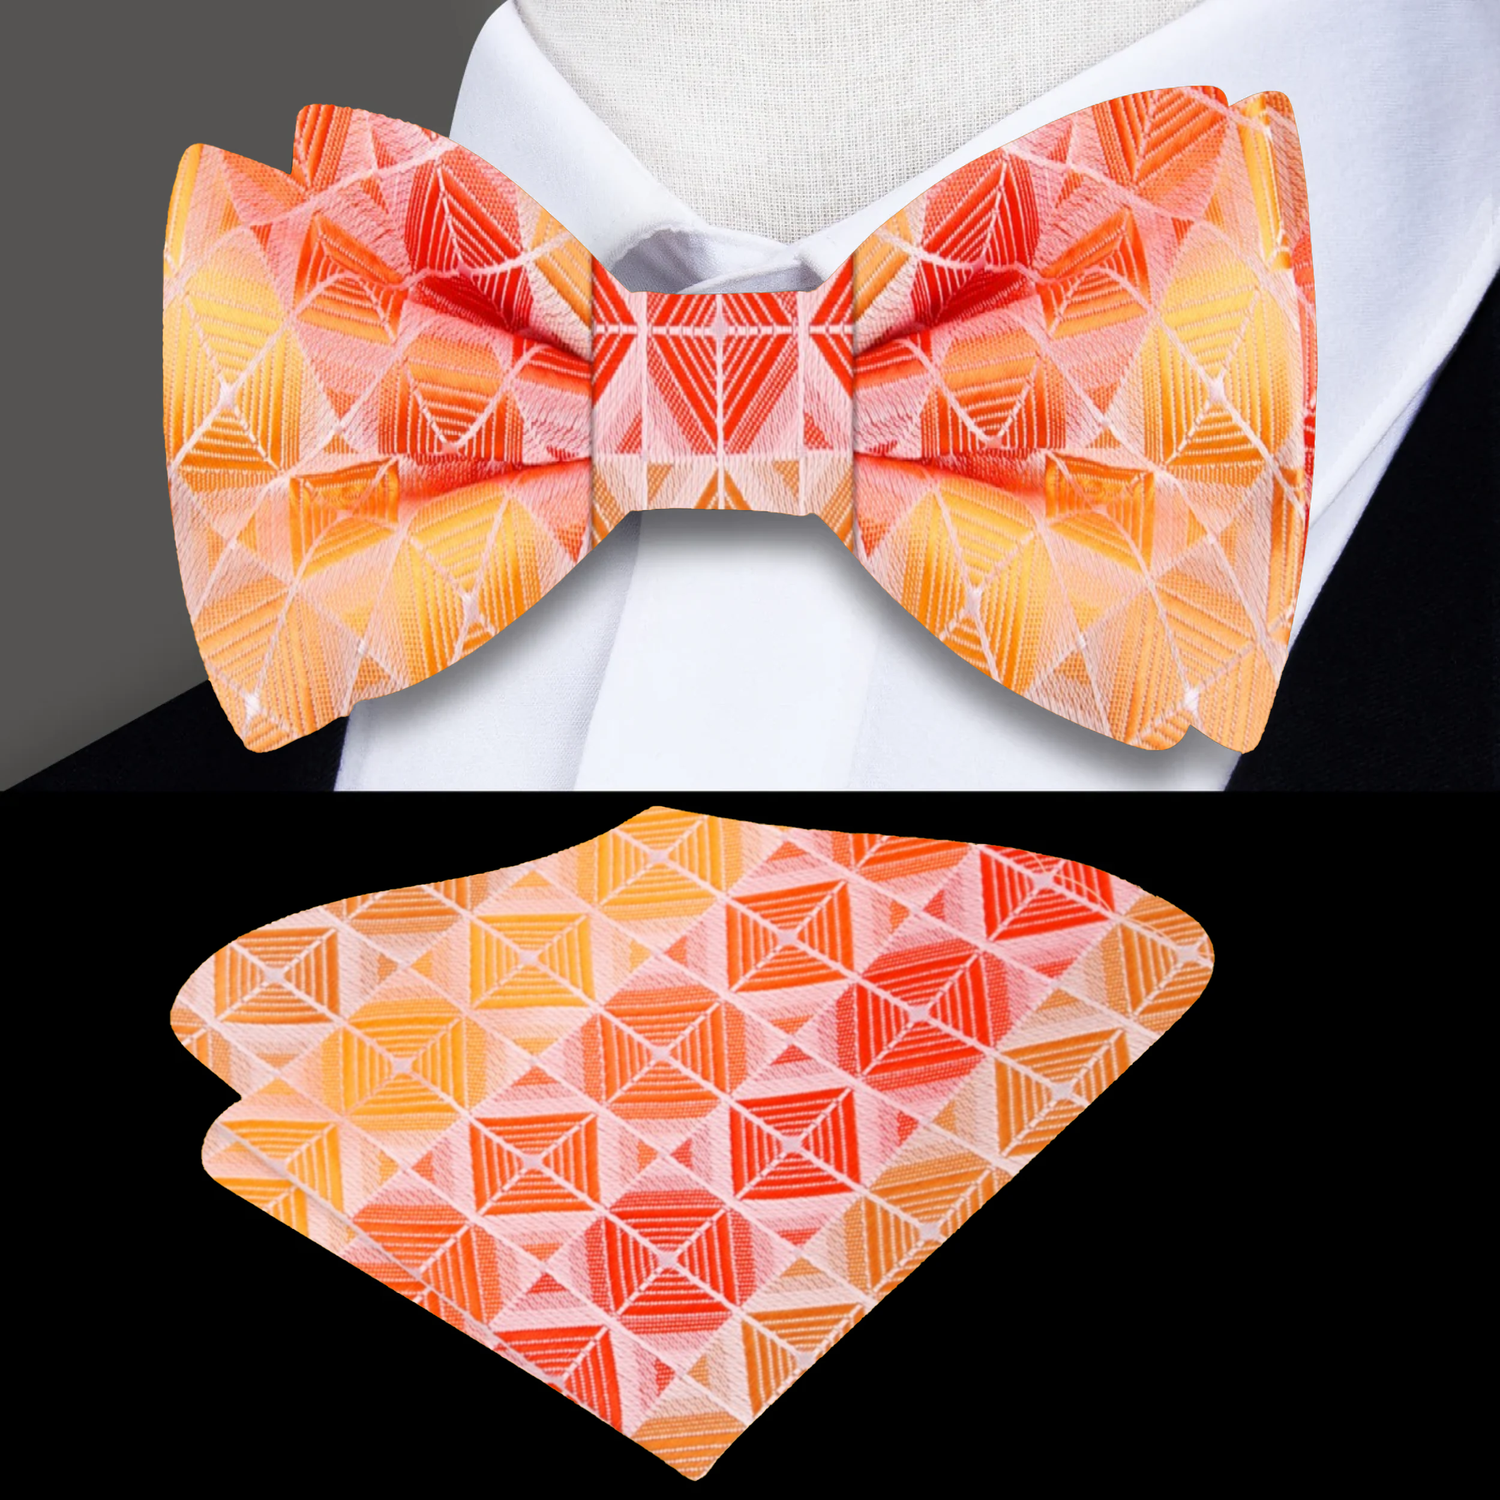 Main: Shades of Orange Geometric Blocks Bow Tie and Square